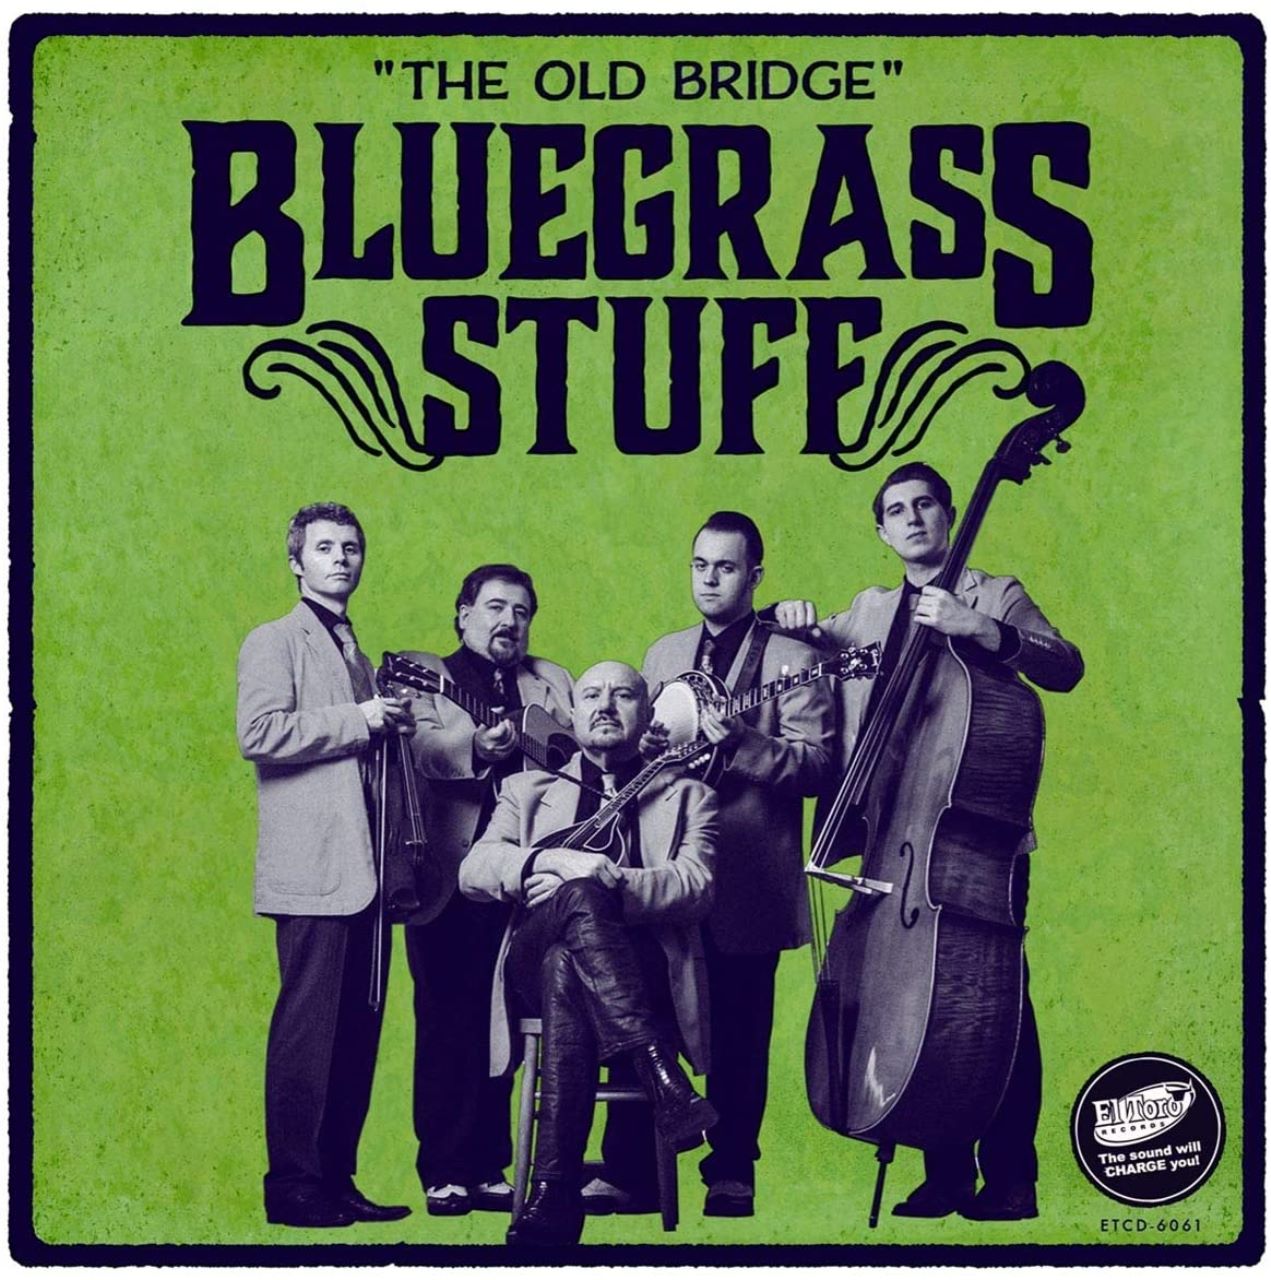 Bluegrass Stuff – The Old Bridge cover album